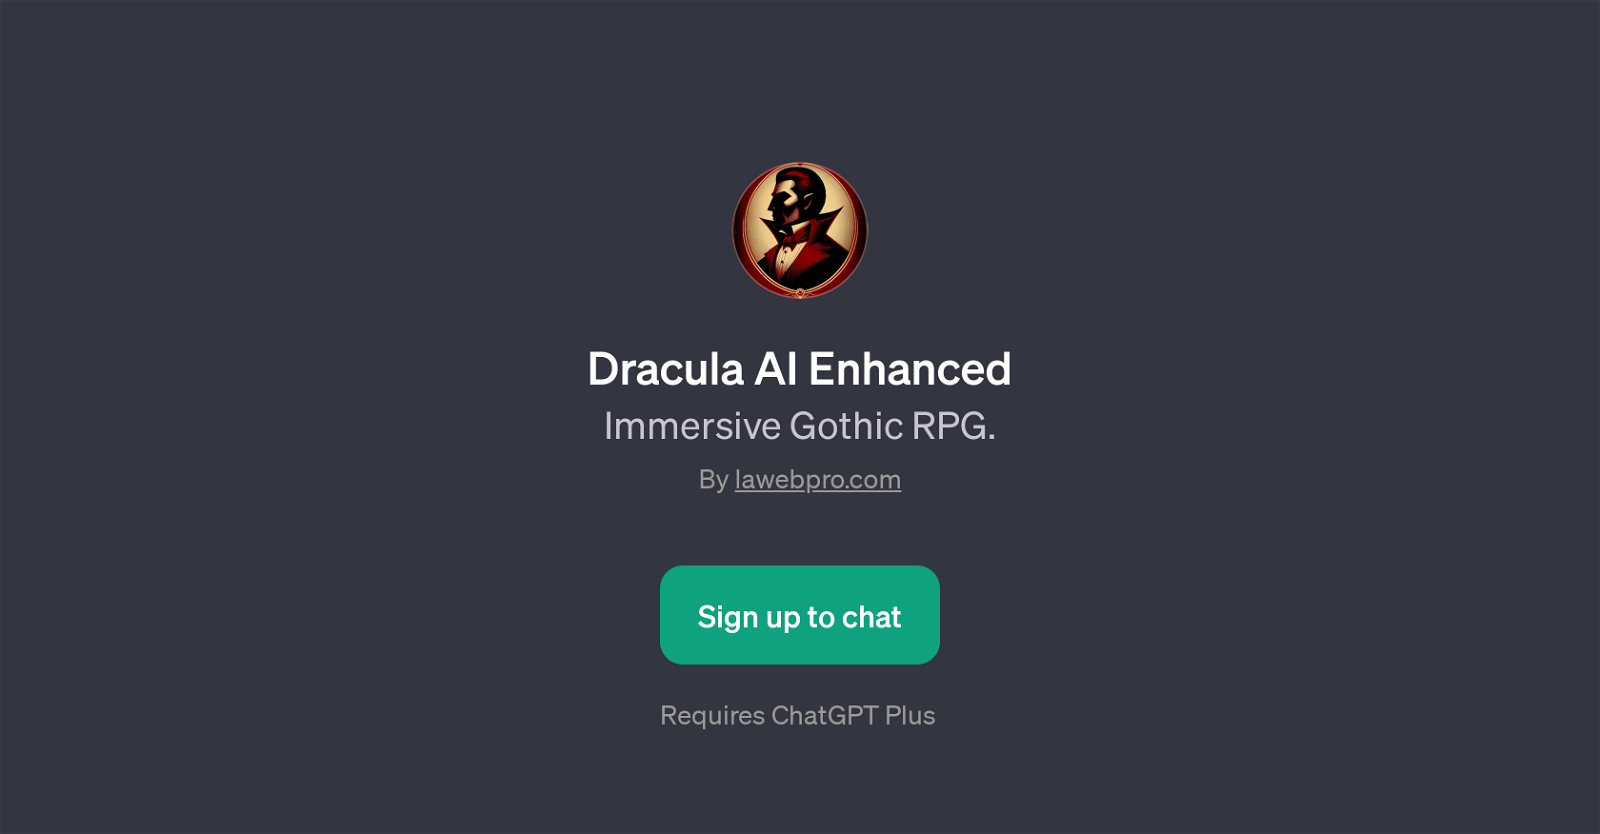 Dracula AI Enhanced website